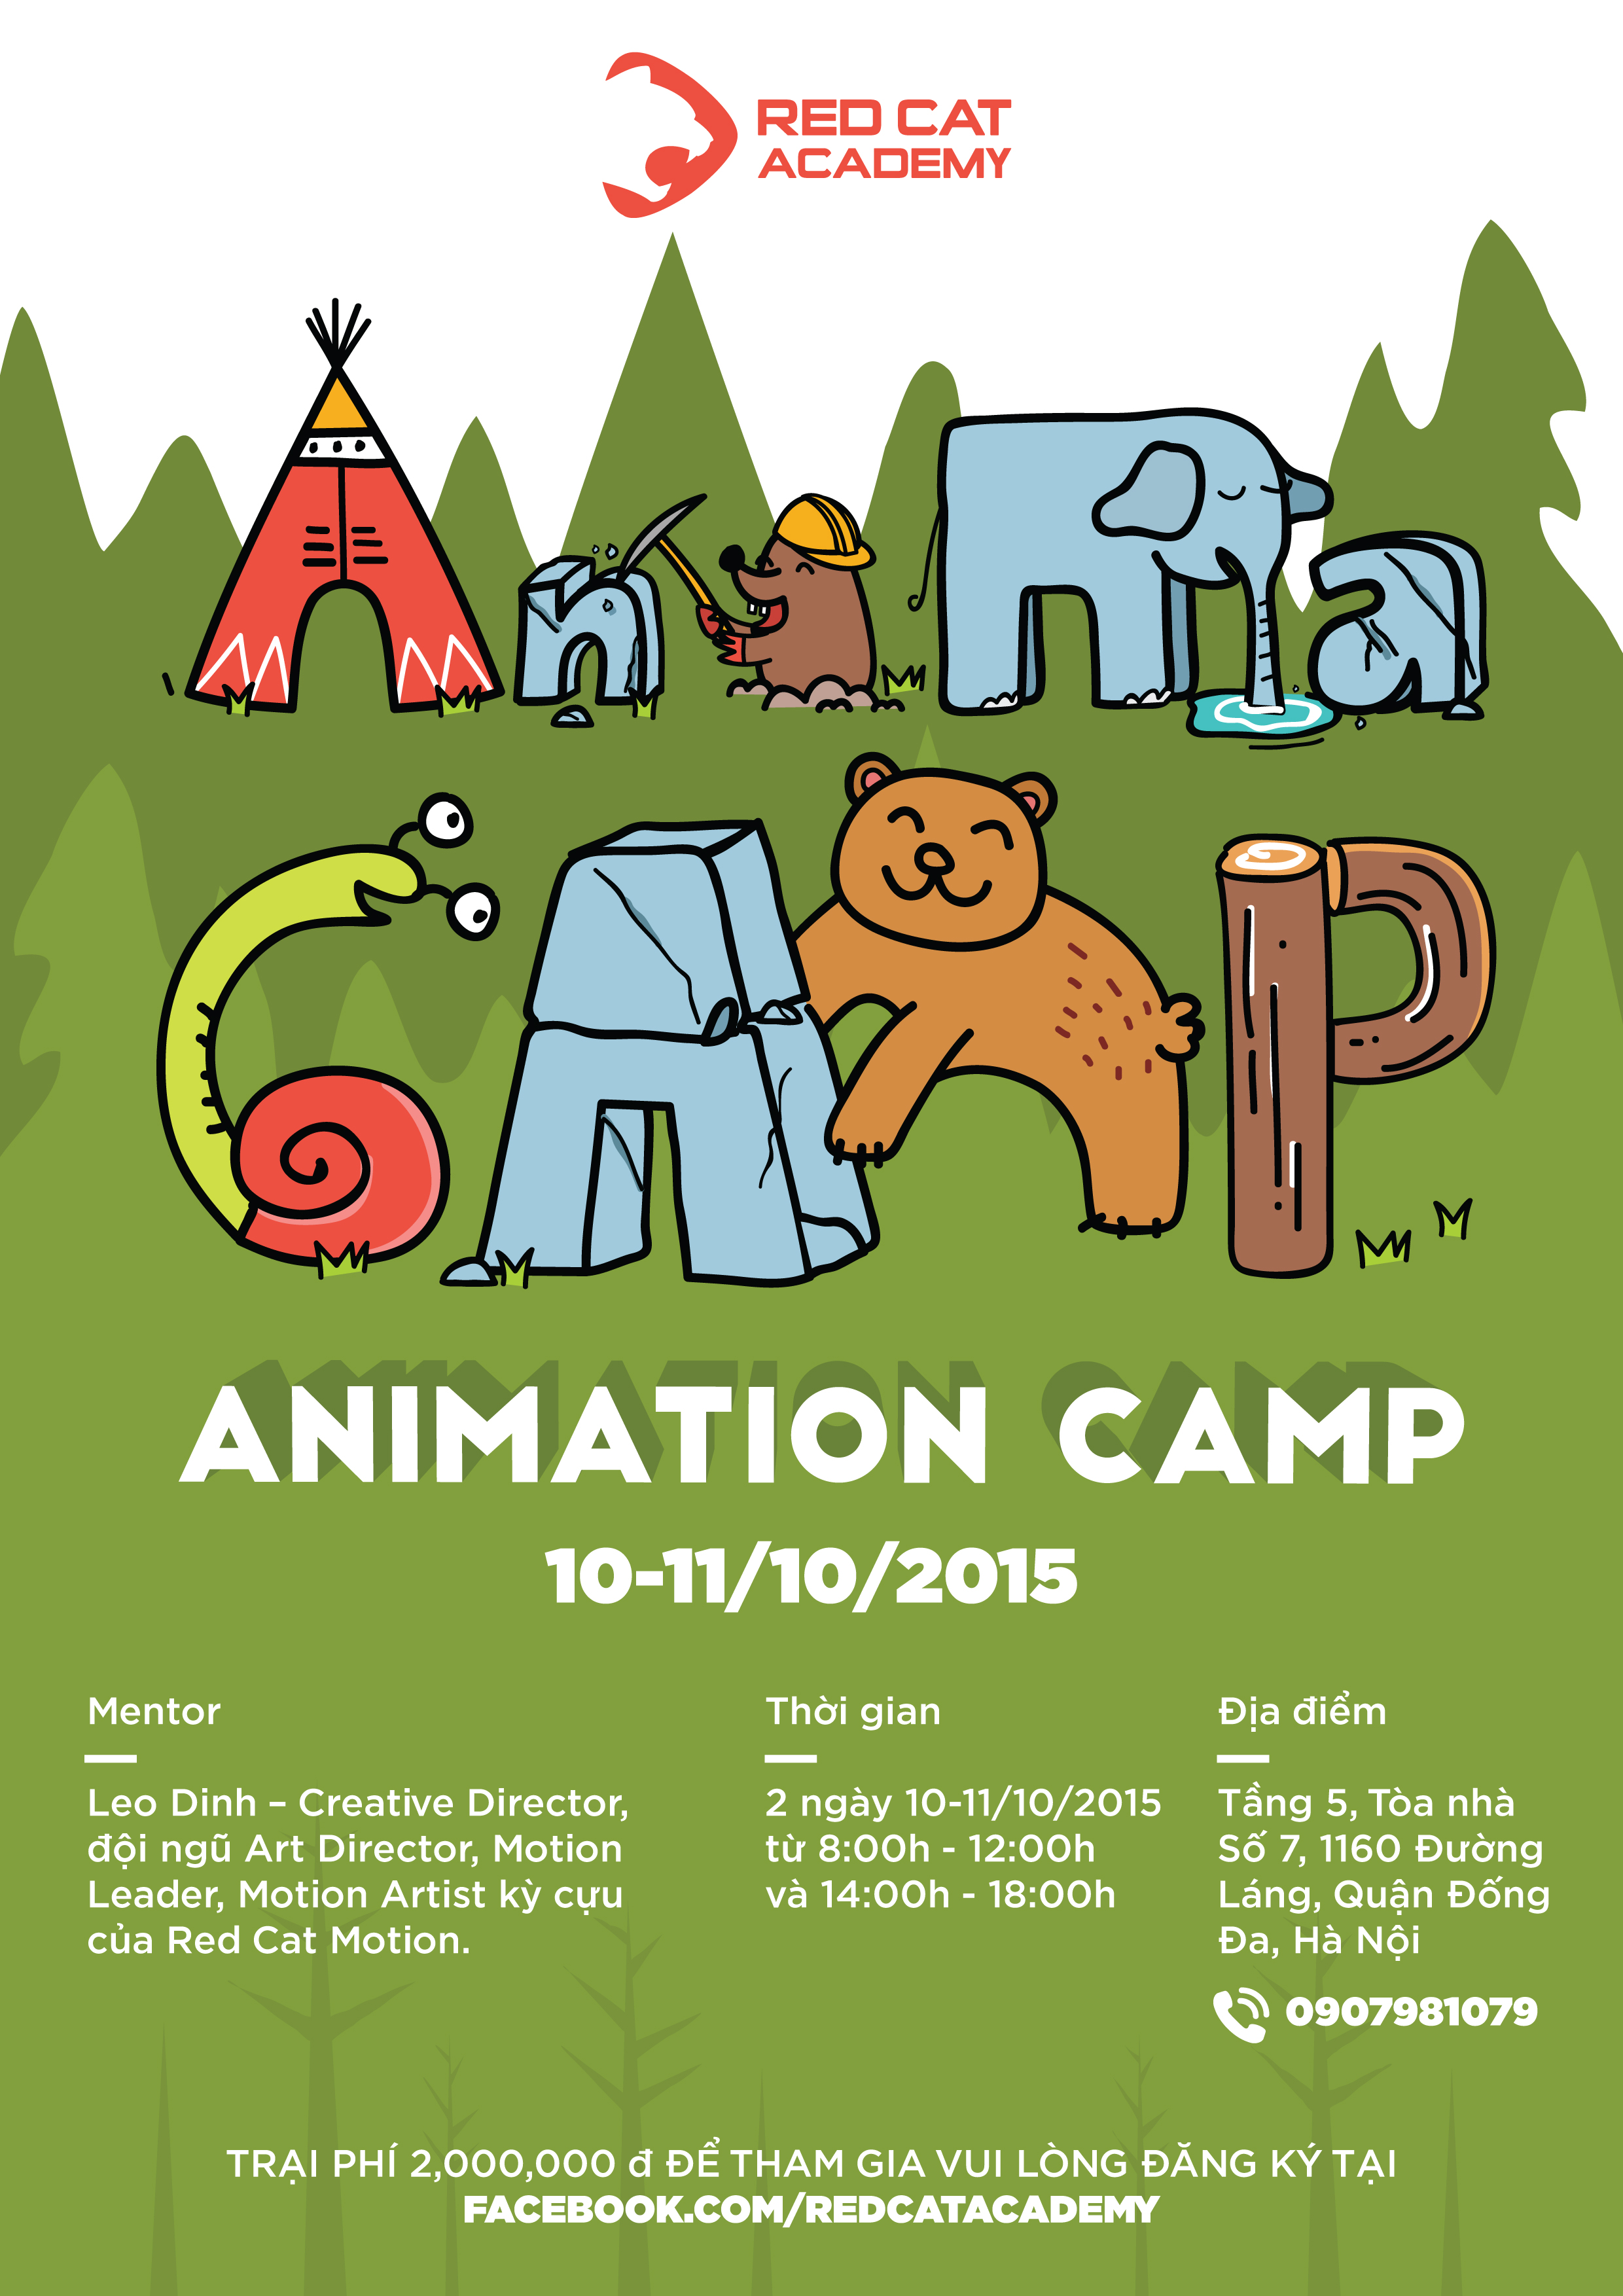 rgb_creative_redcat_motion_Animation Camp-01